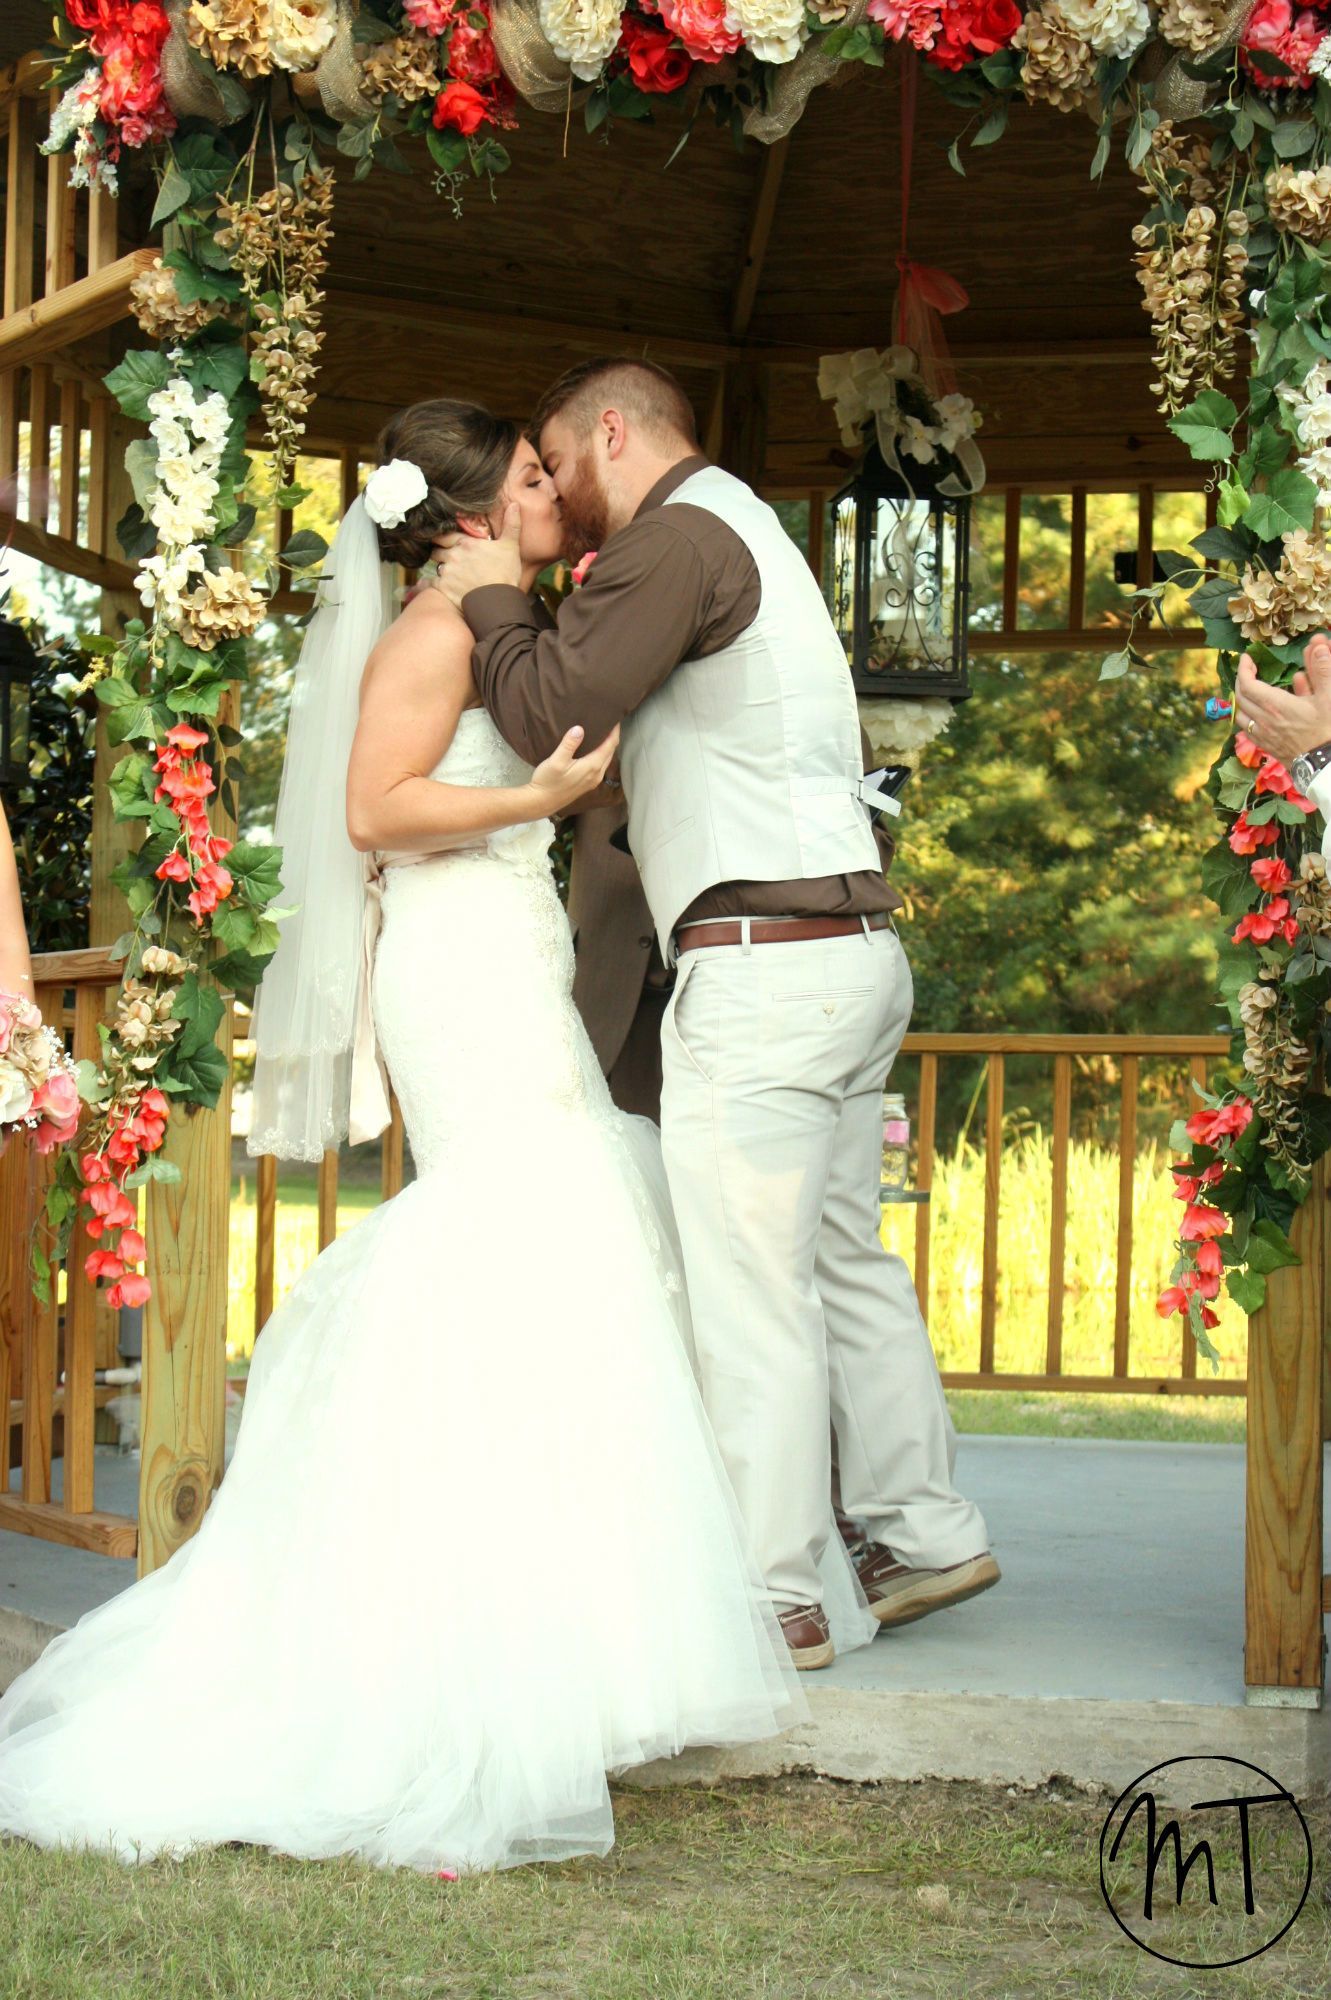 You may kiss your bride! #mysouthernwedding #jncberrybash | My ...